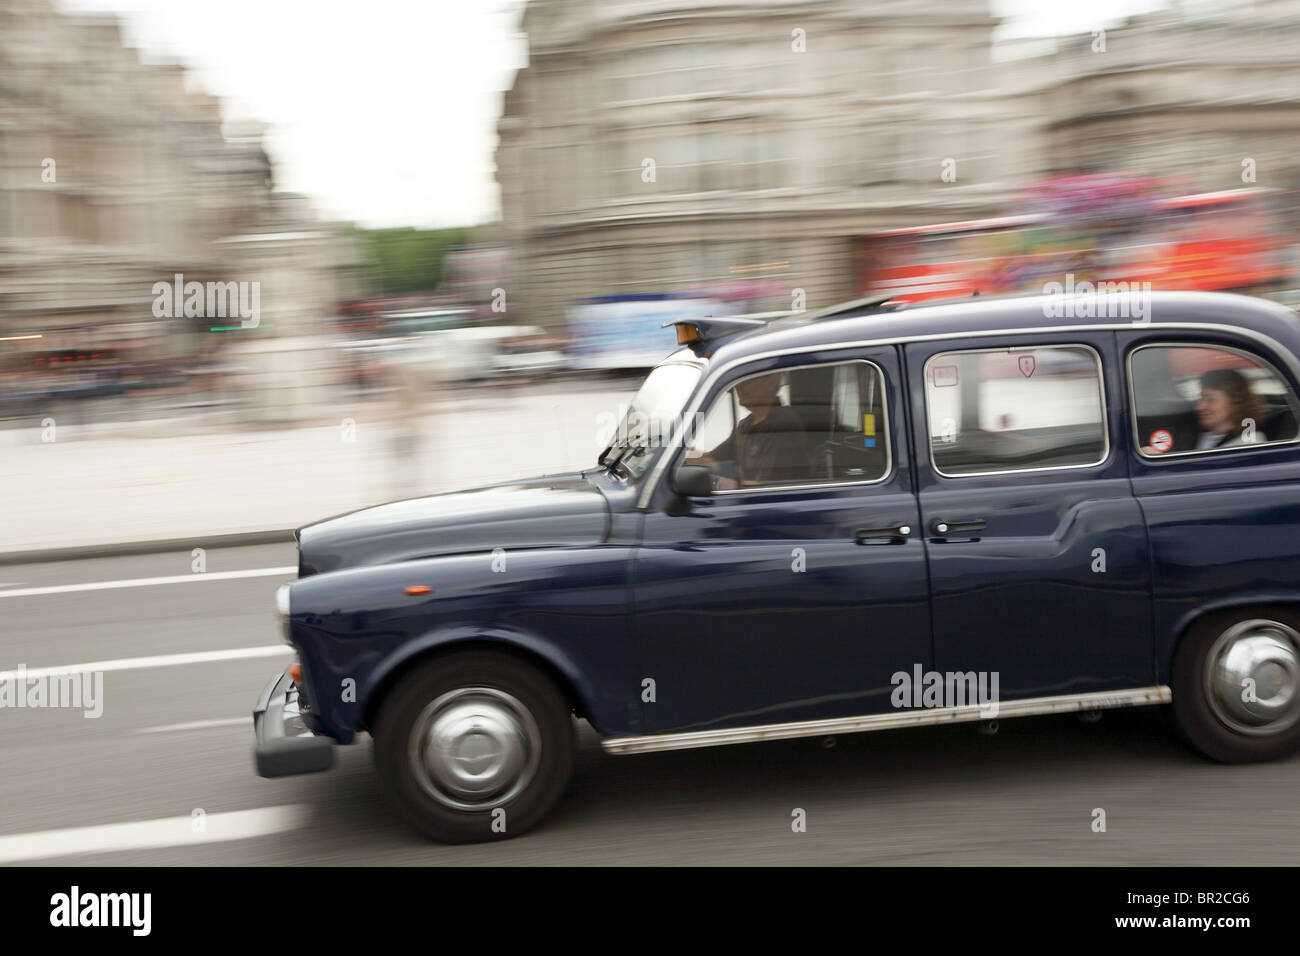 Taxi in Trafalgar Square, London Stock Photo